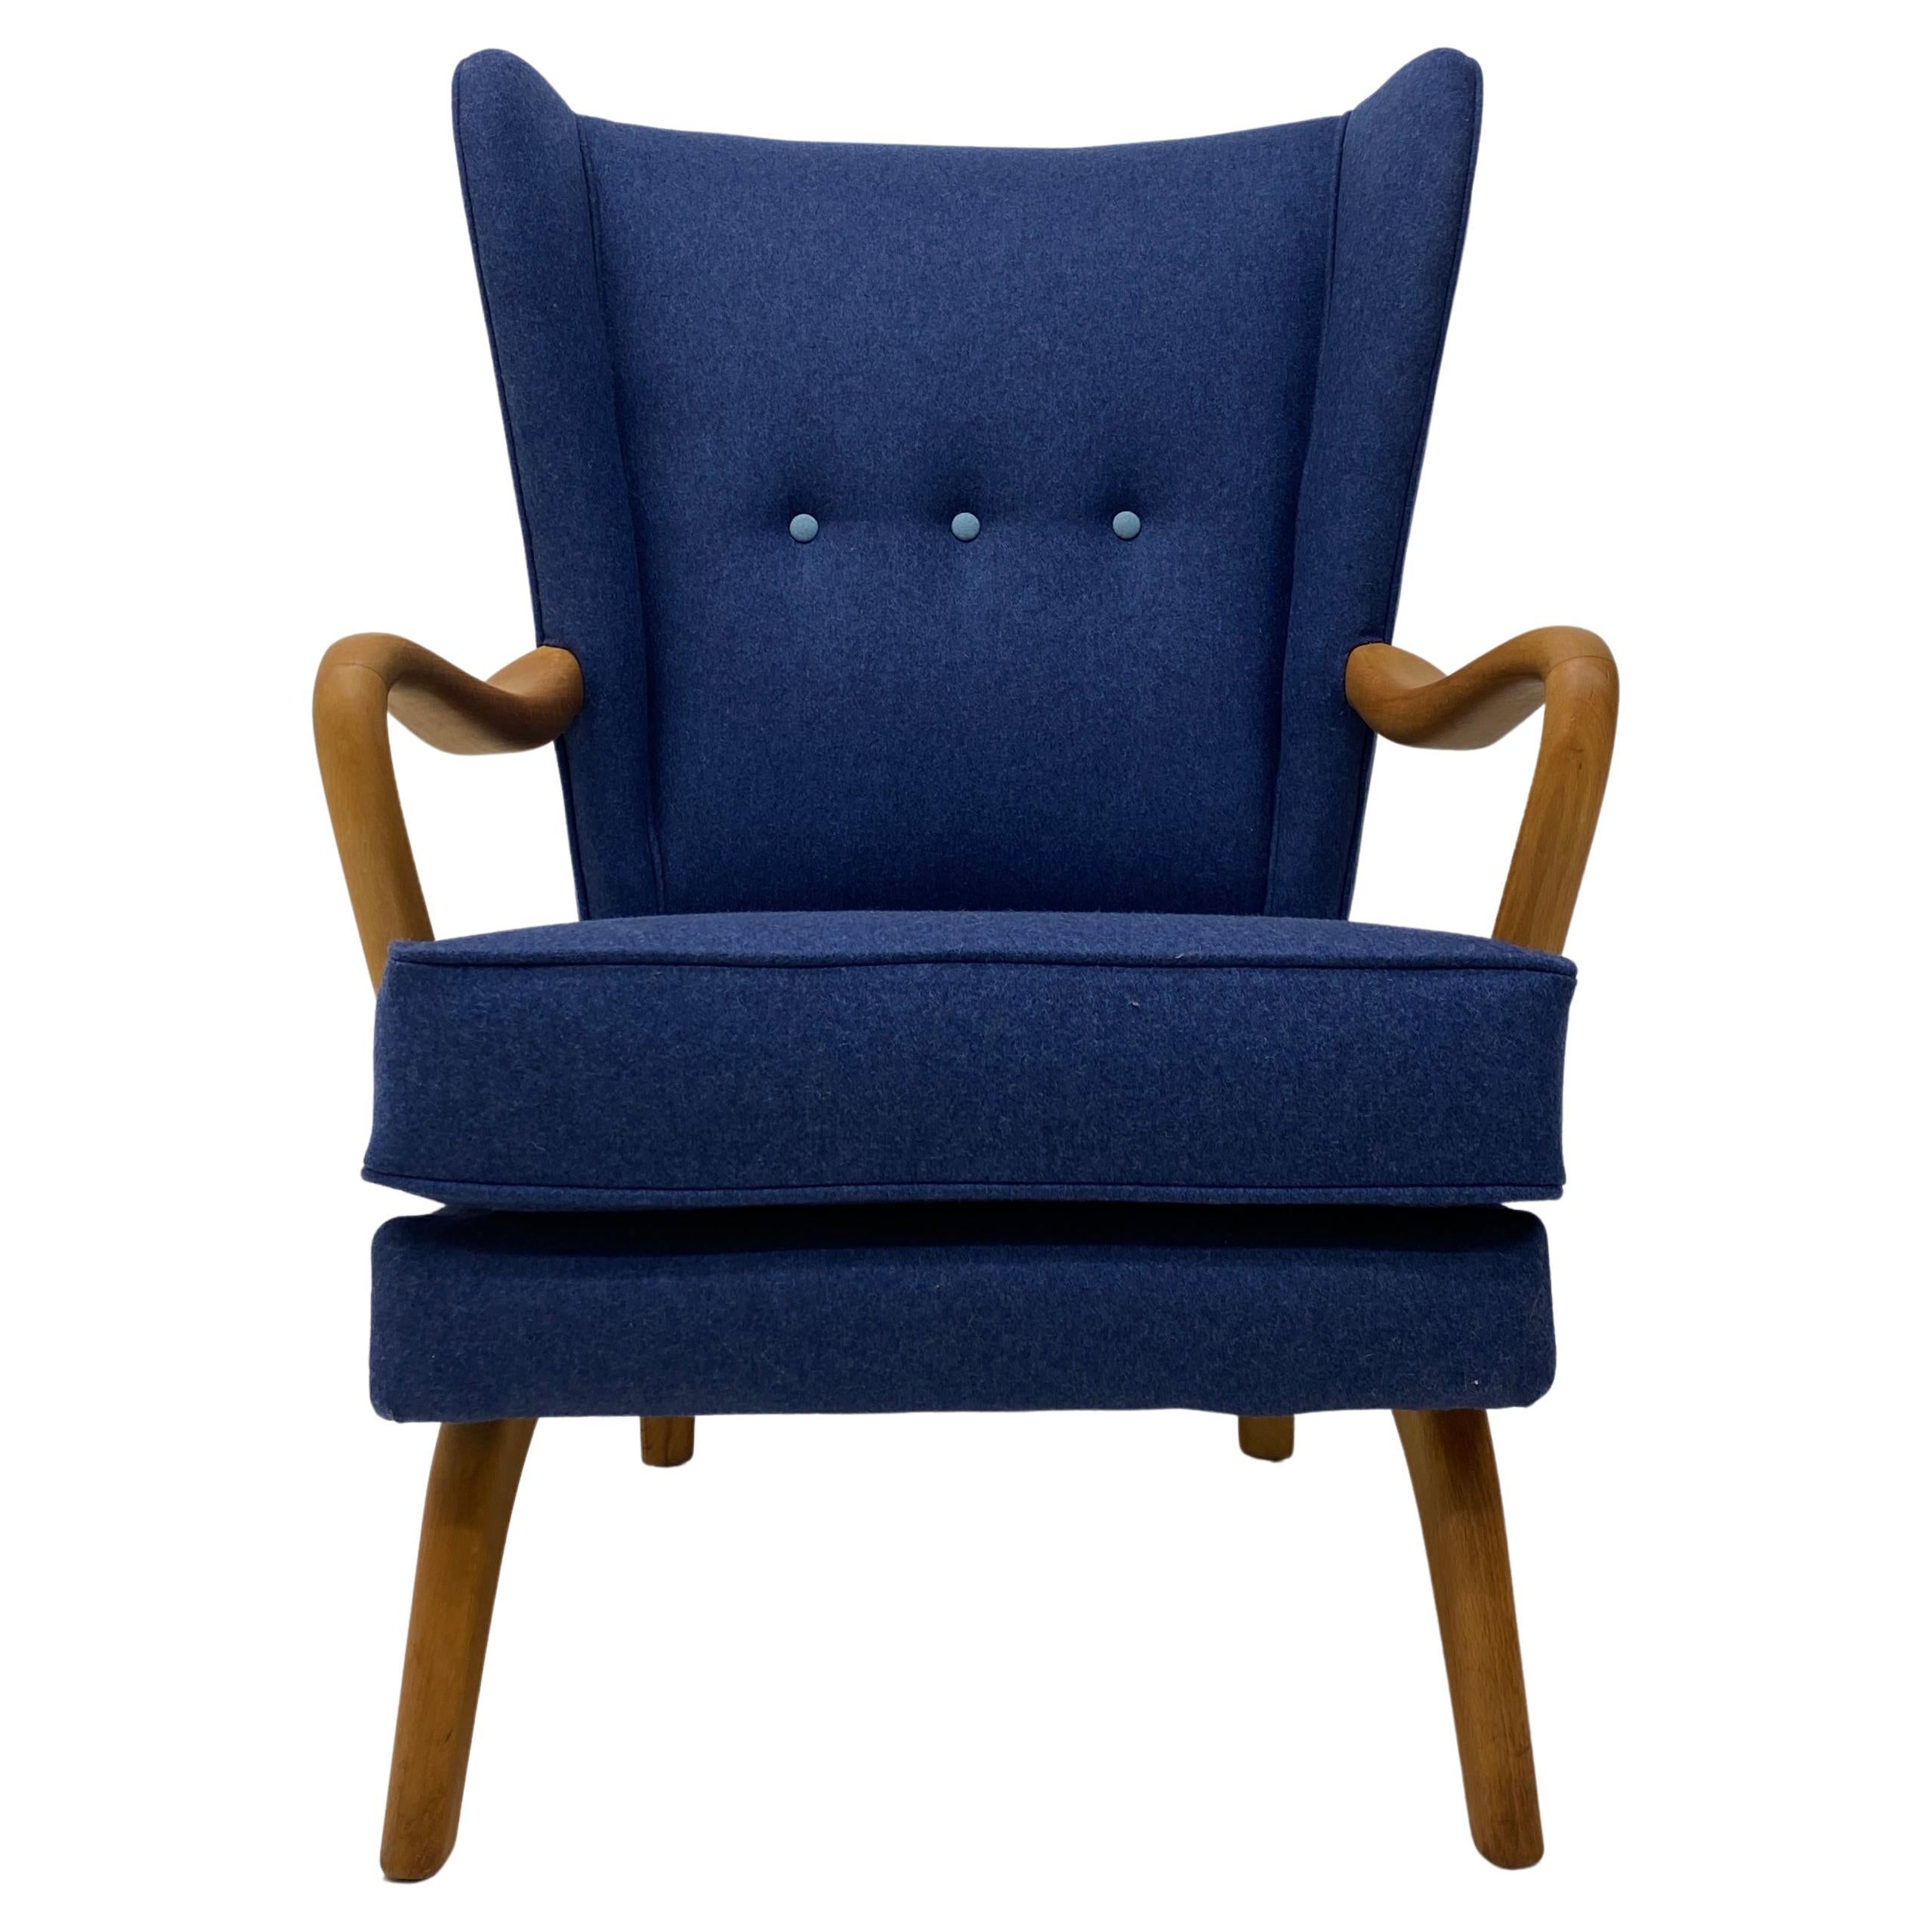 Bambino Chair - 4 For Sale on 1stDibs